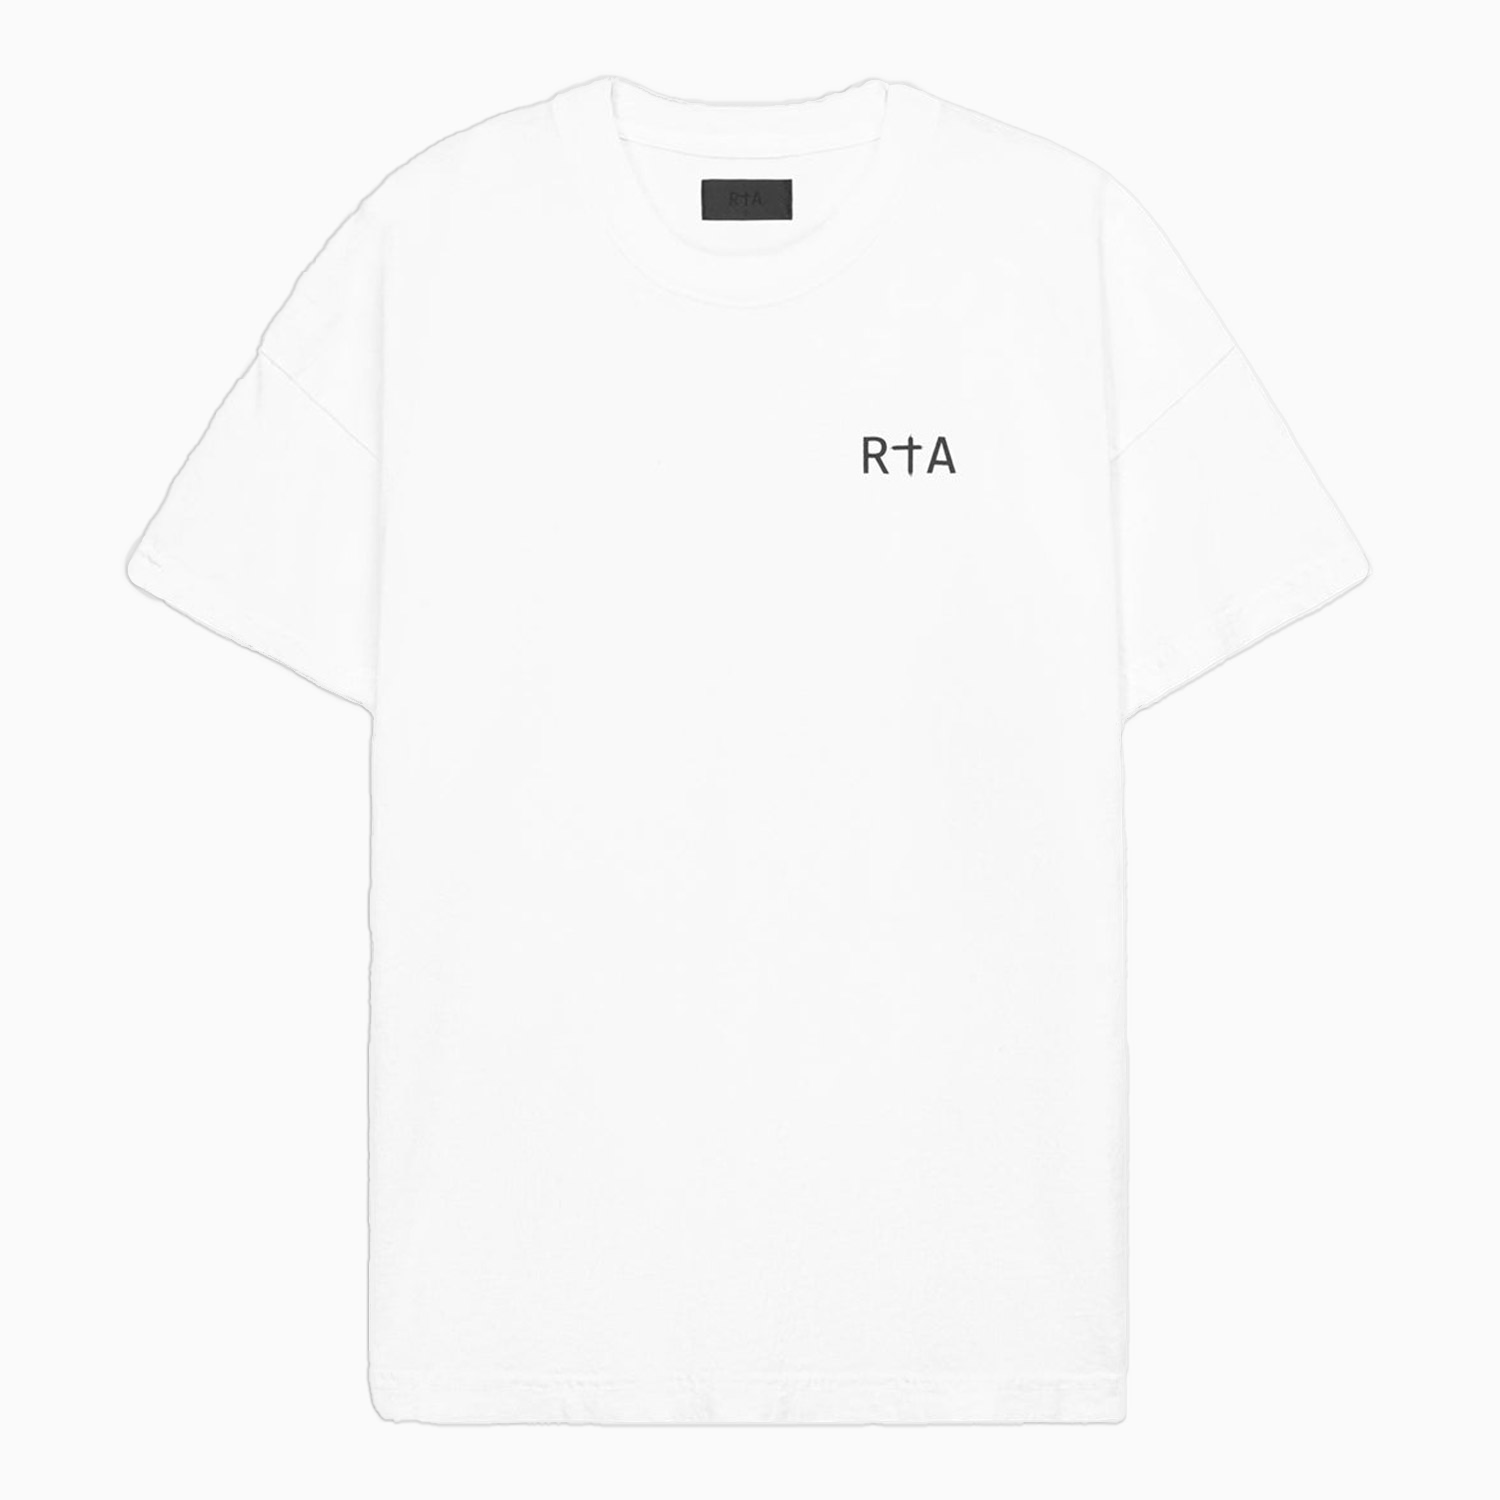 rta-mens-Black-chest-logo-t-shirt-mu23k621-t1786wtclb